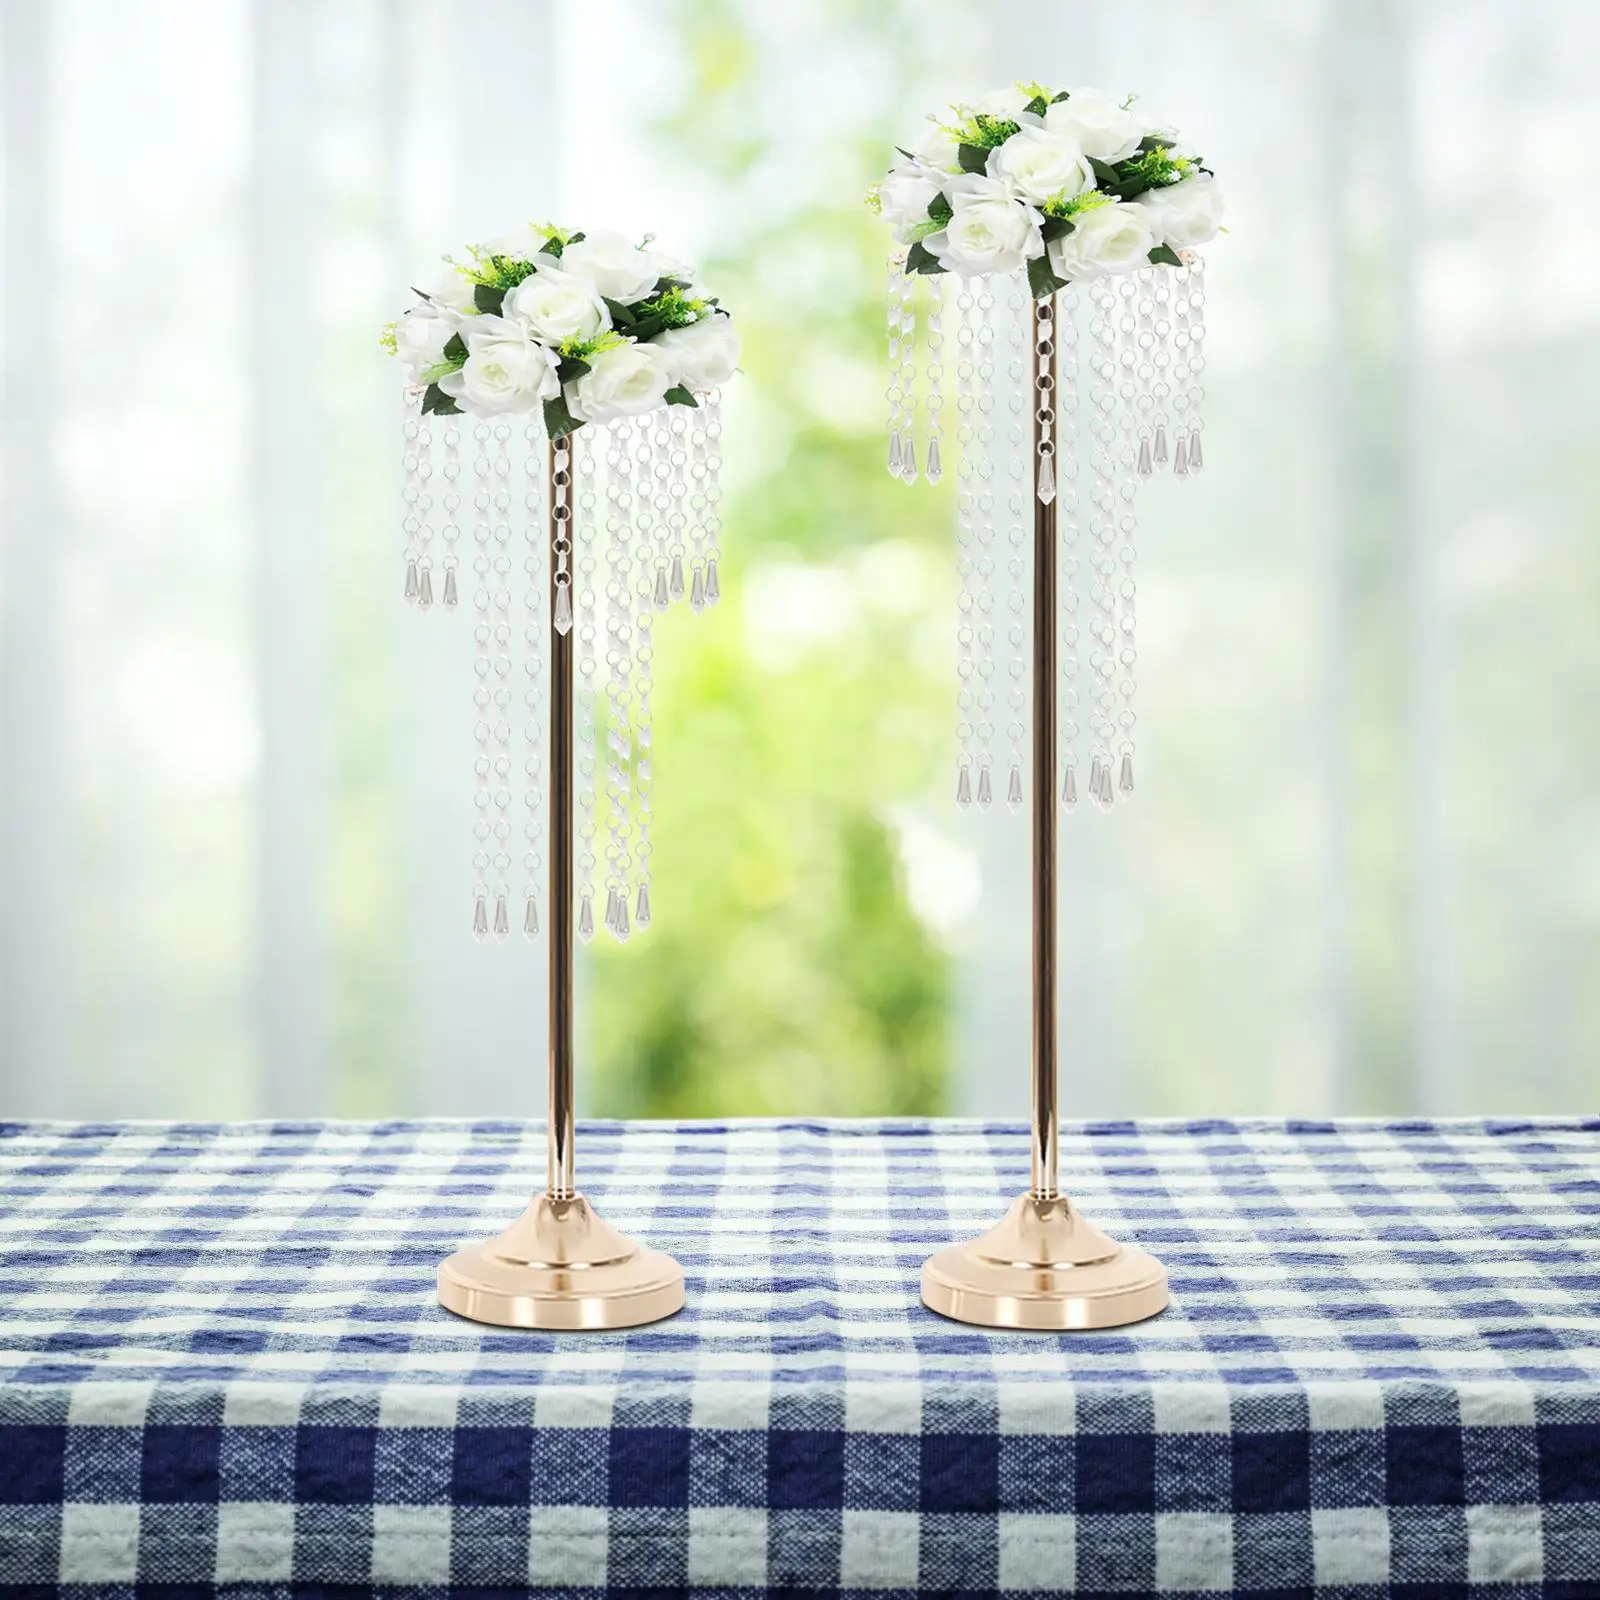 Crystal Floral Display Rack Centerpieces Flowers Holder Stand Desktop Container Metal Flower Vase for Dinner Wedding Road Leads